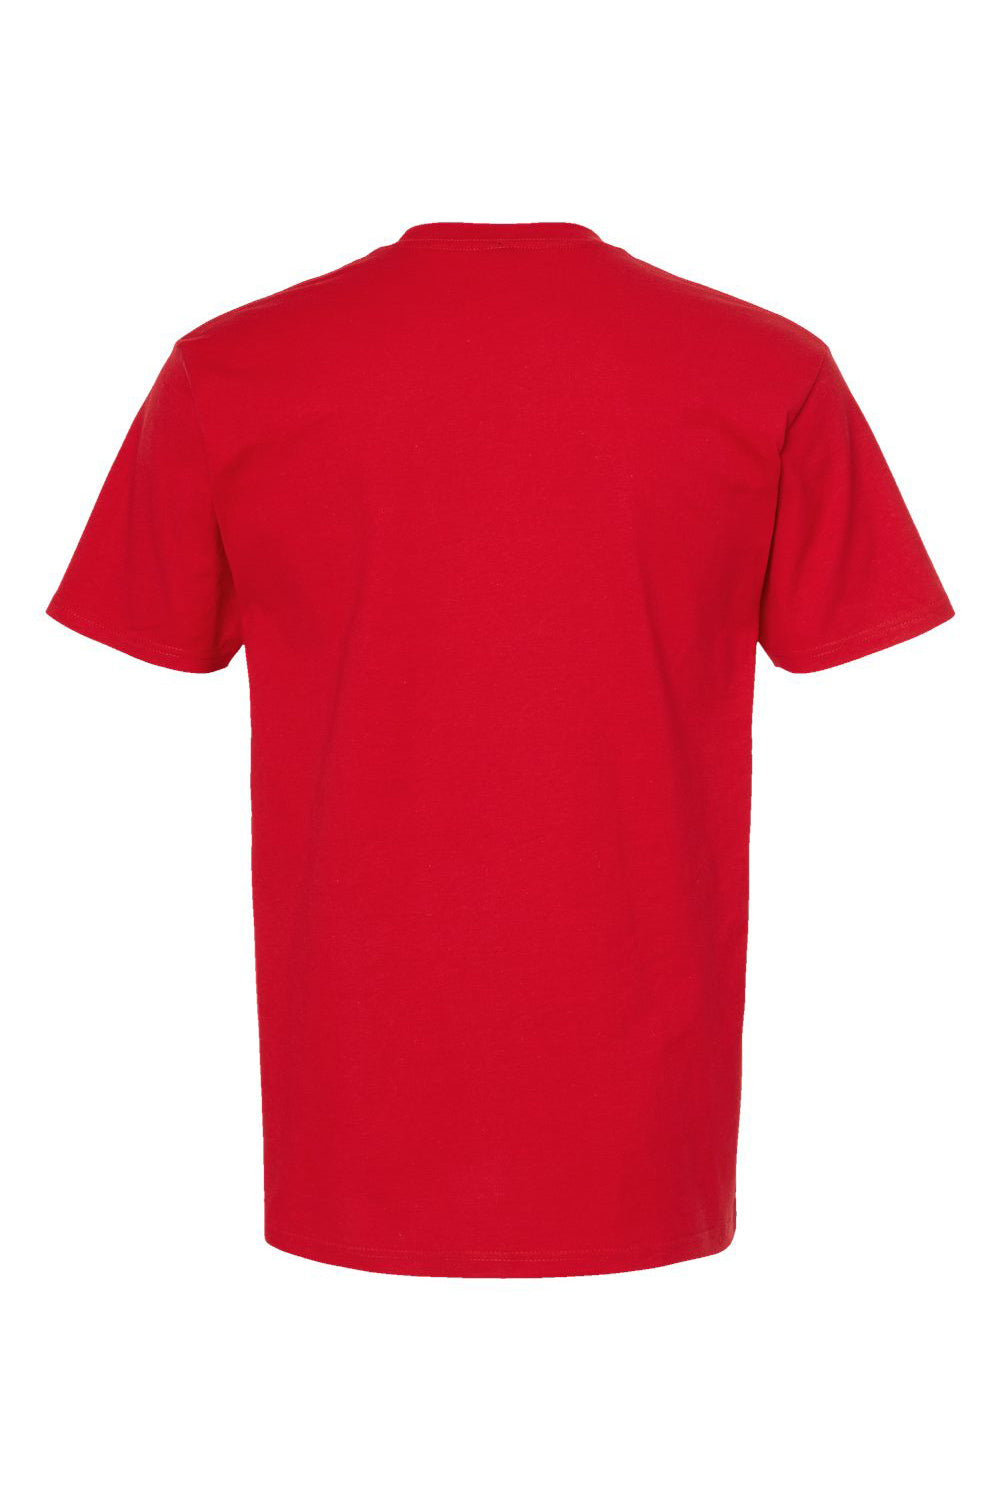 Tultex 293 Mens Jersey Short Sleeve Crewneck T-Shirt w/ Pocket Red Flat Back